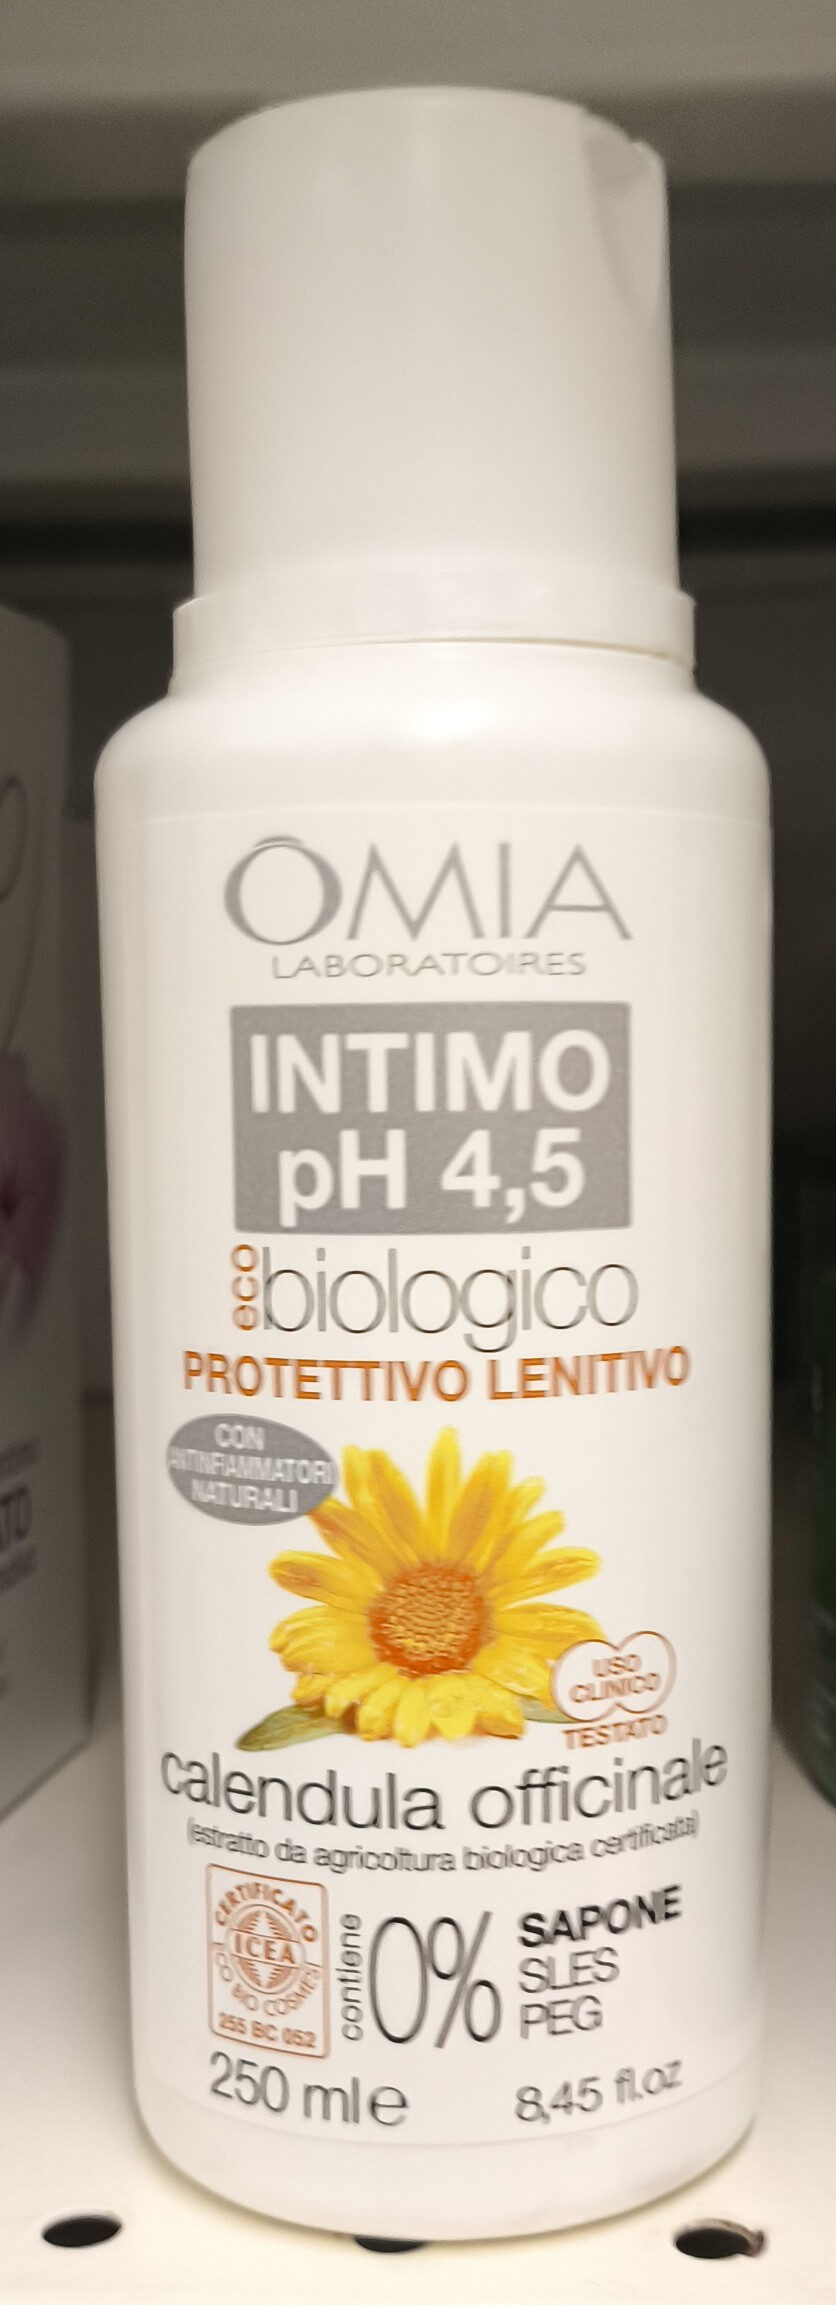 Intimo ph 4,5 - Product - it